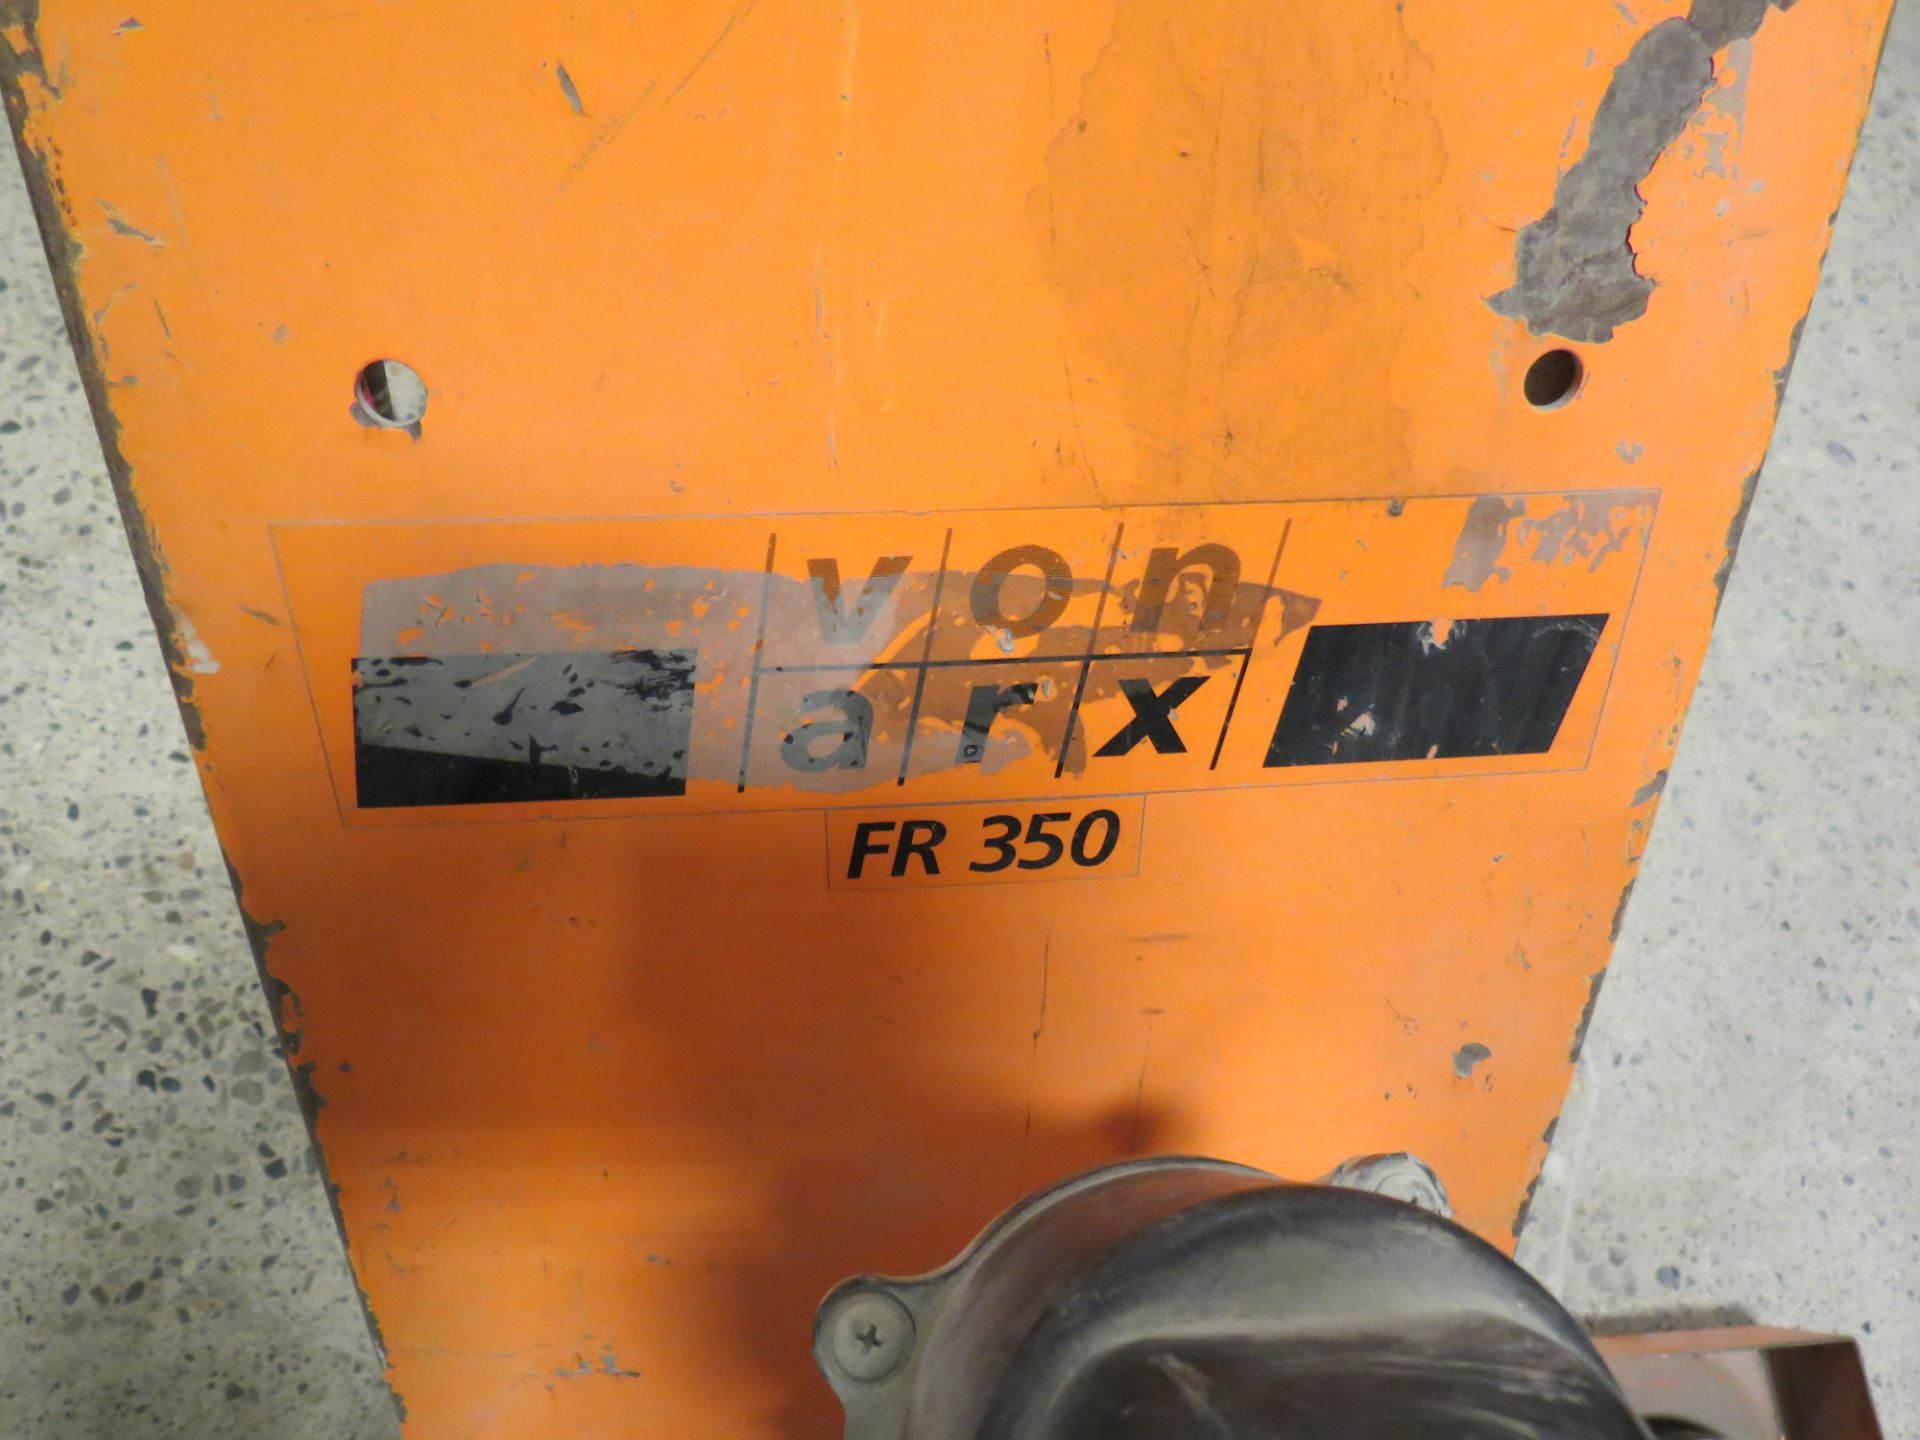 Von Arx FR 350 Concrete Breaker, Honda Eng., 11.0HP (Not-In-Service) - Image 3 of 3